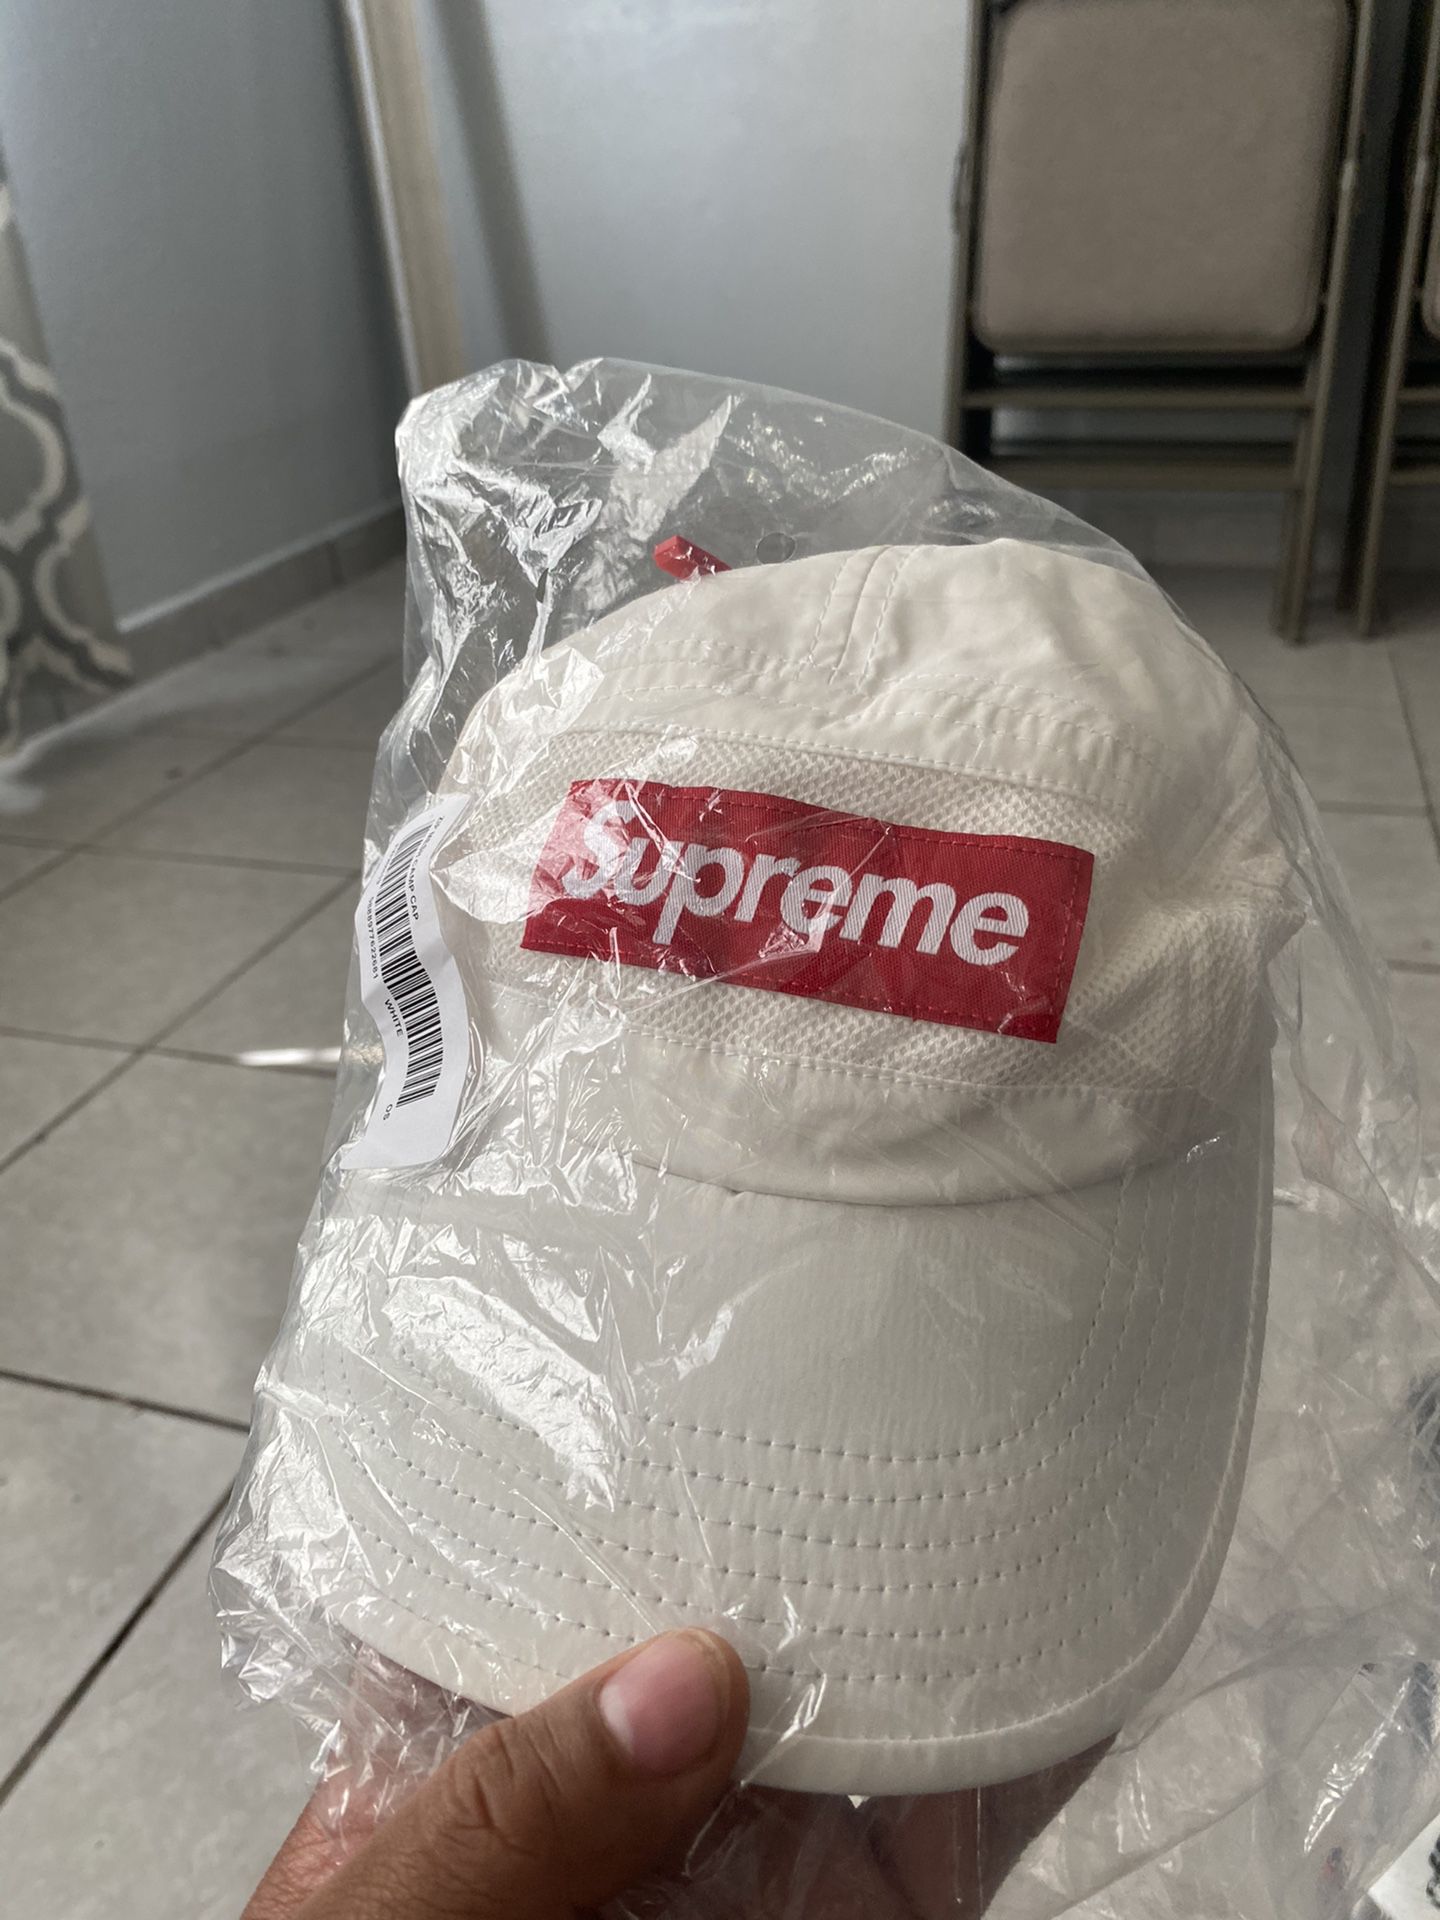 Supreme Hat New